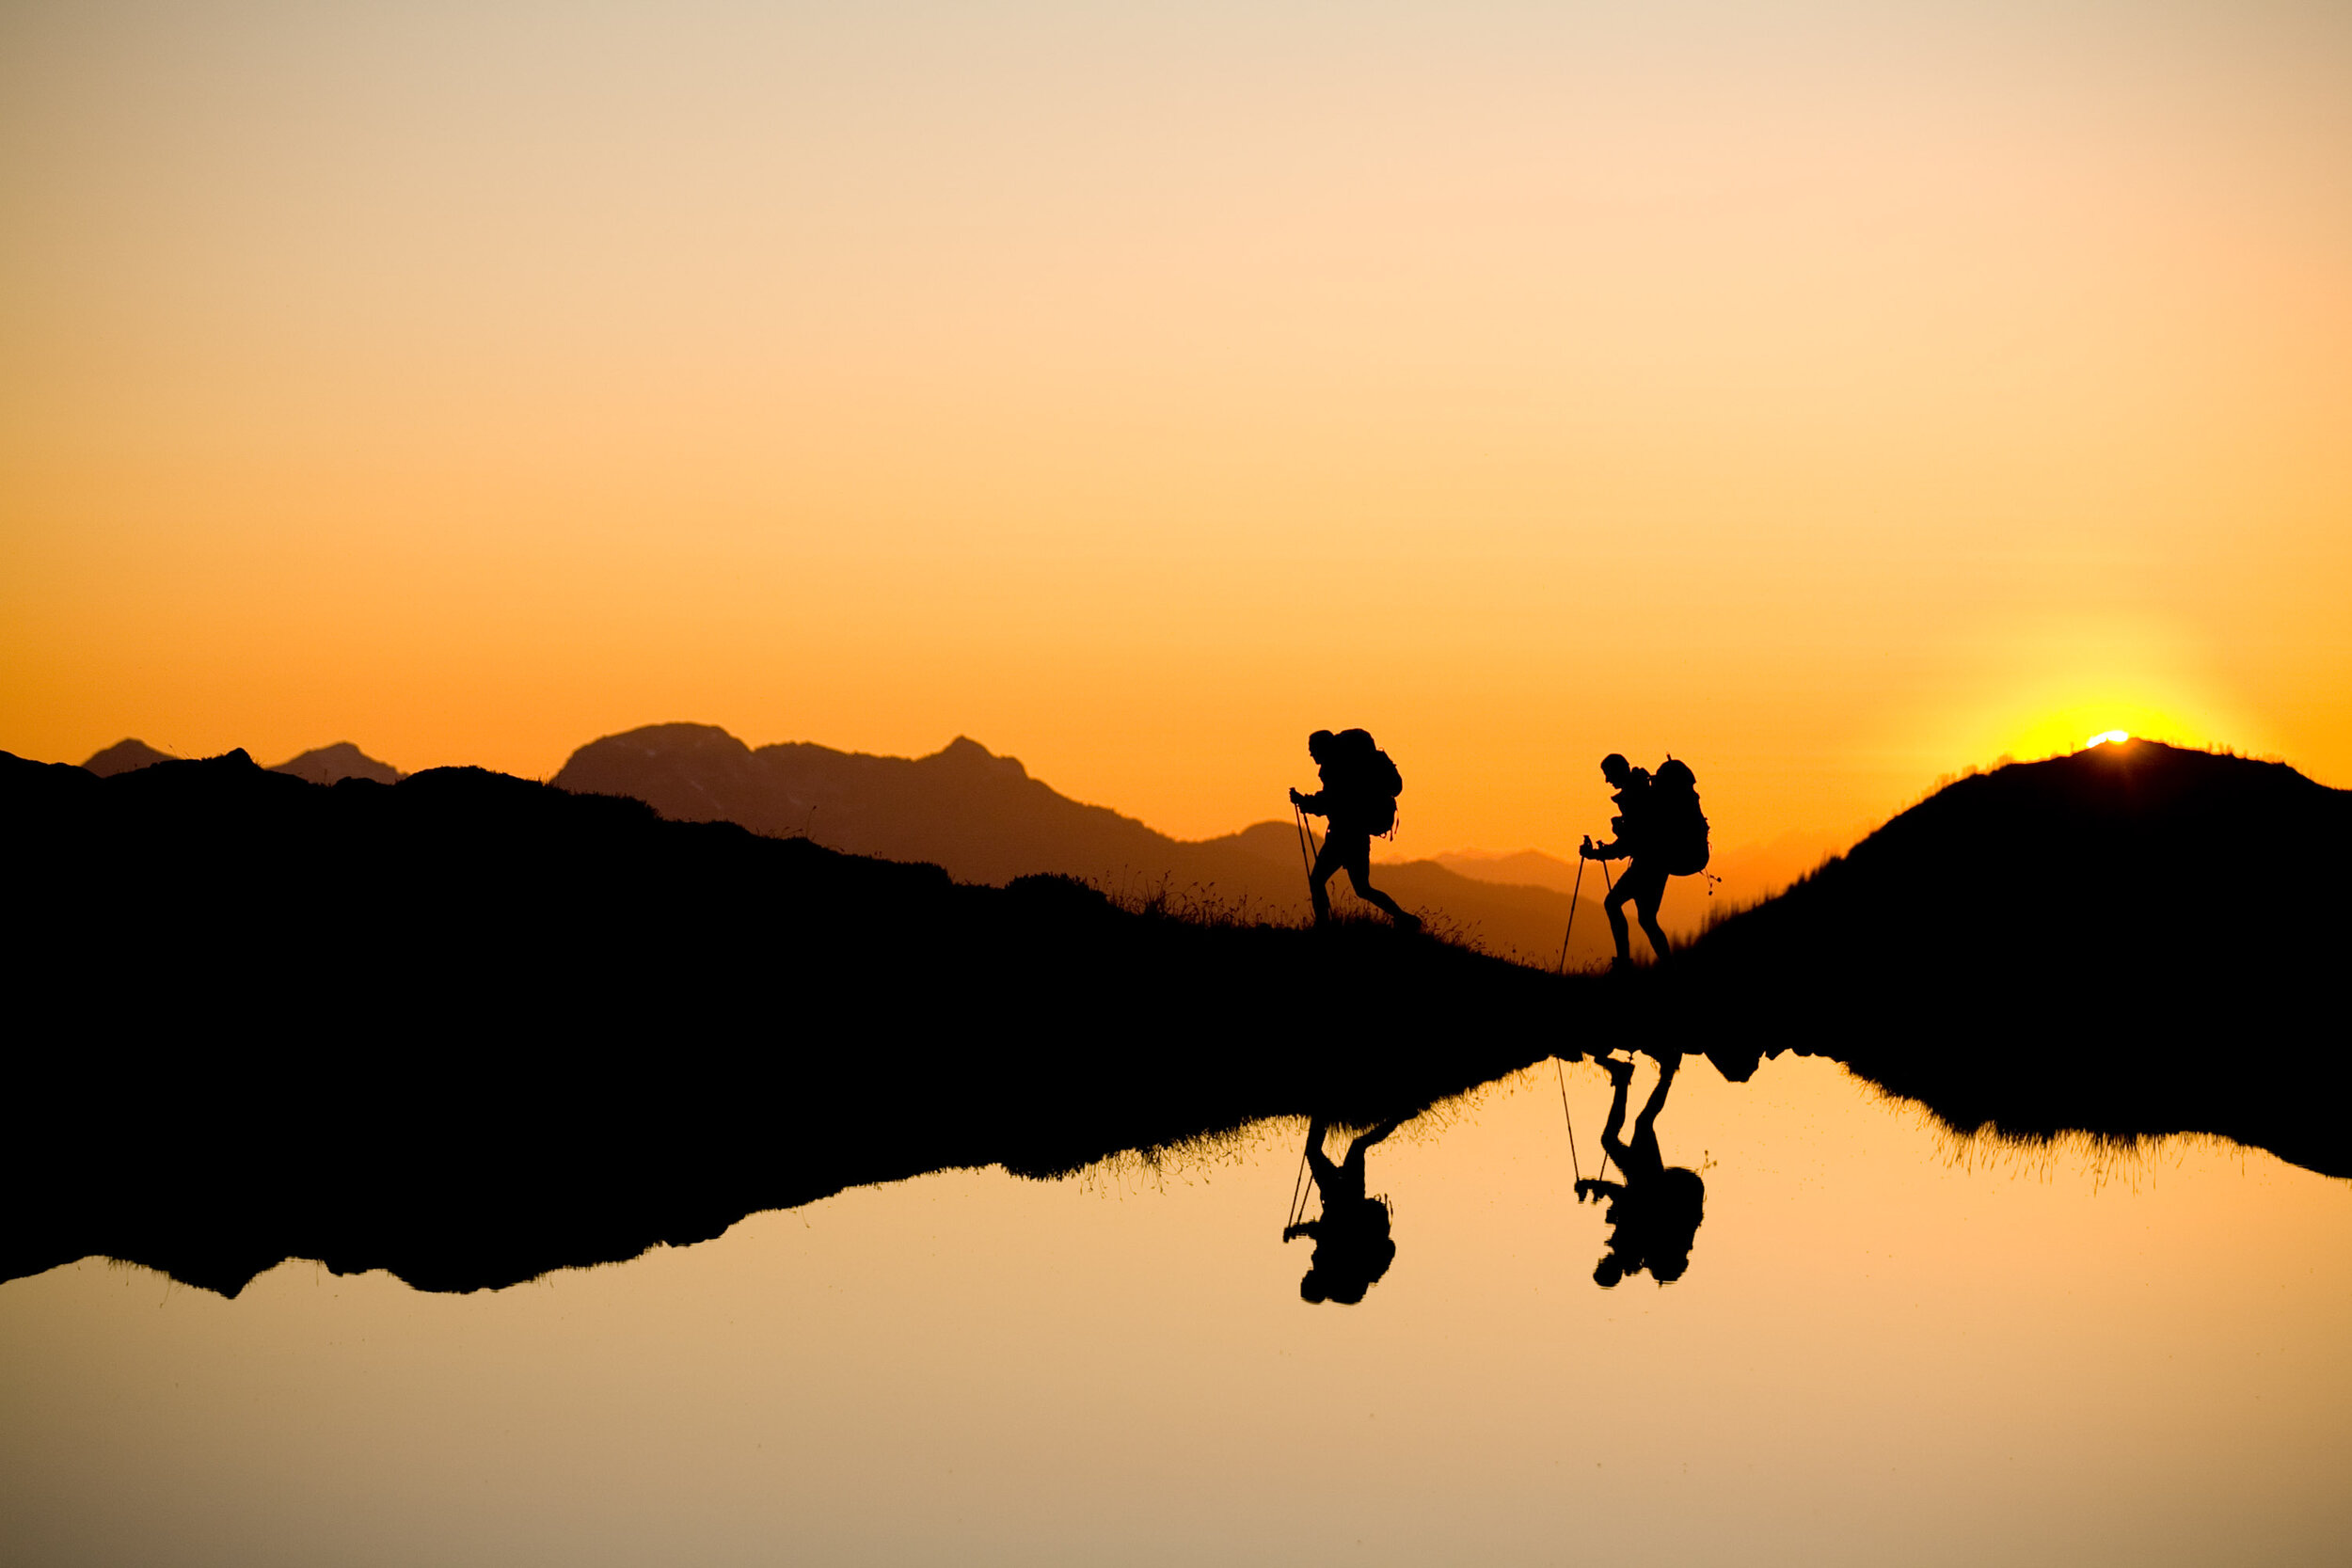  Adventure: Sandy Weil and Karen Schooley hiking near Kool-Aid Lake at sunset, North Cascades 